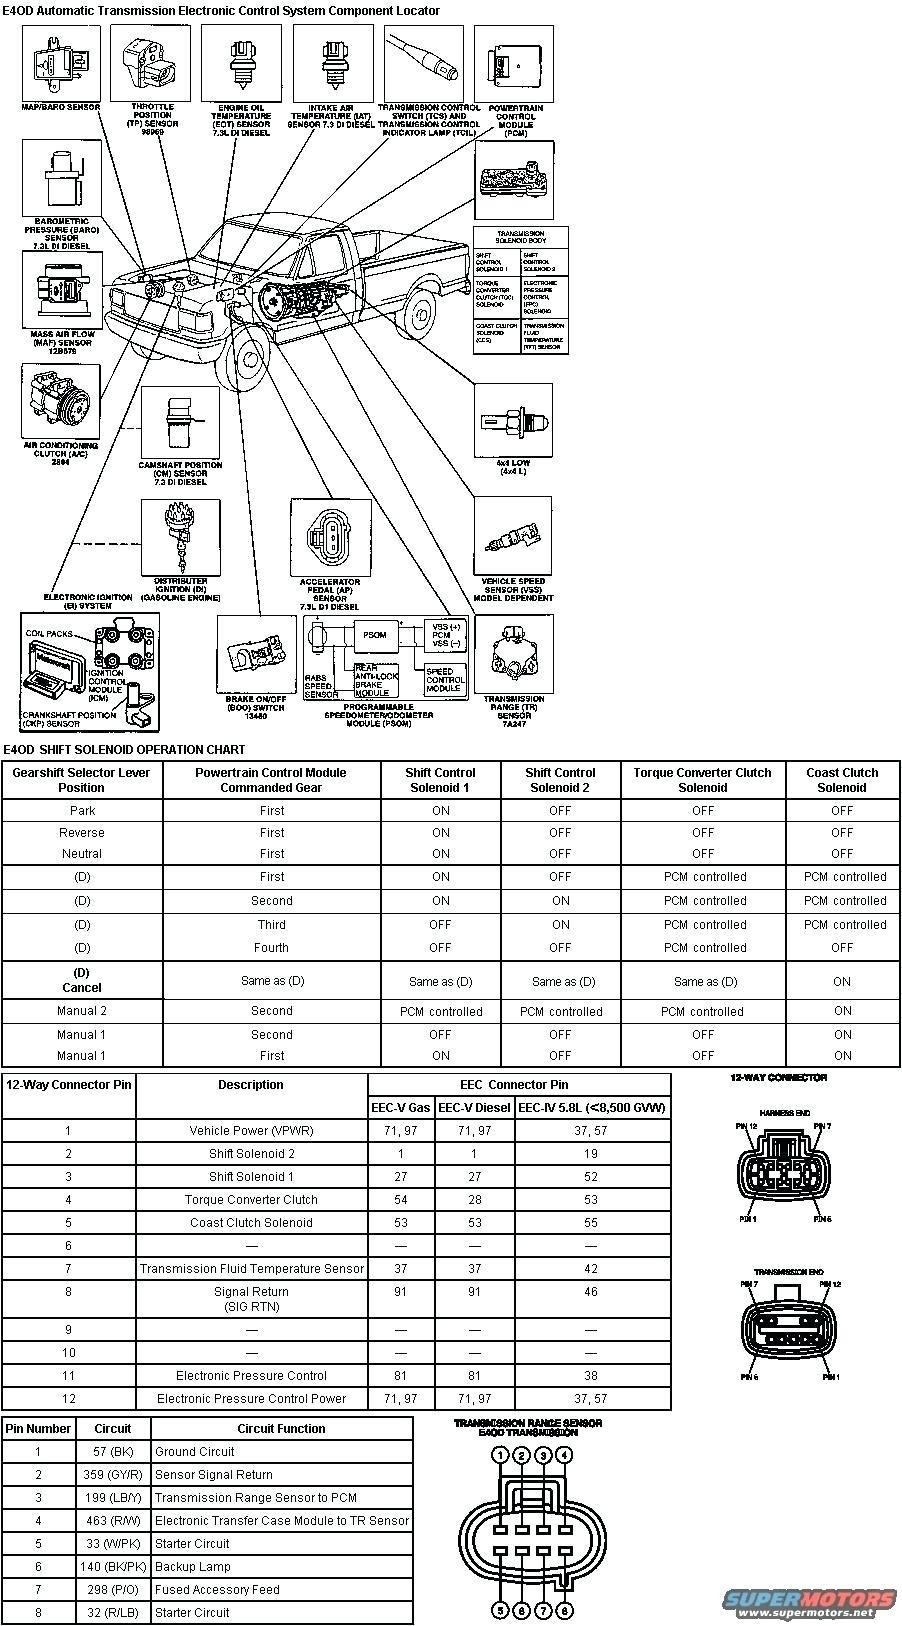 Diagram Ford Diagrams File Gj50607 - 4R70W Transmission Wiring Diagram